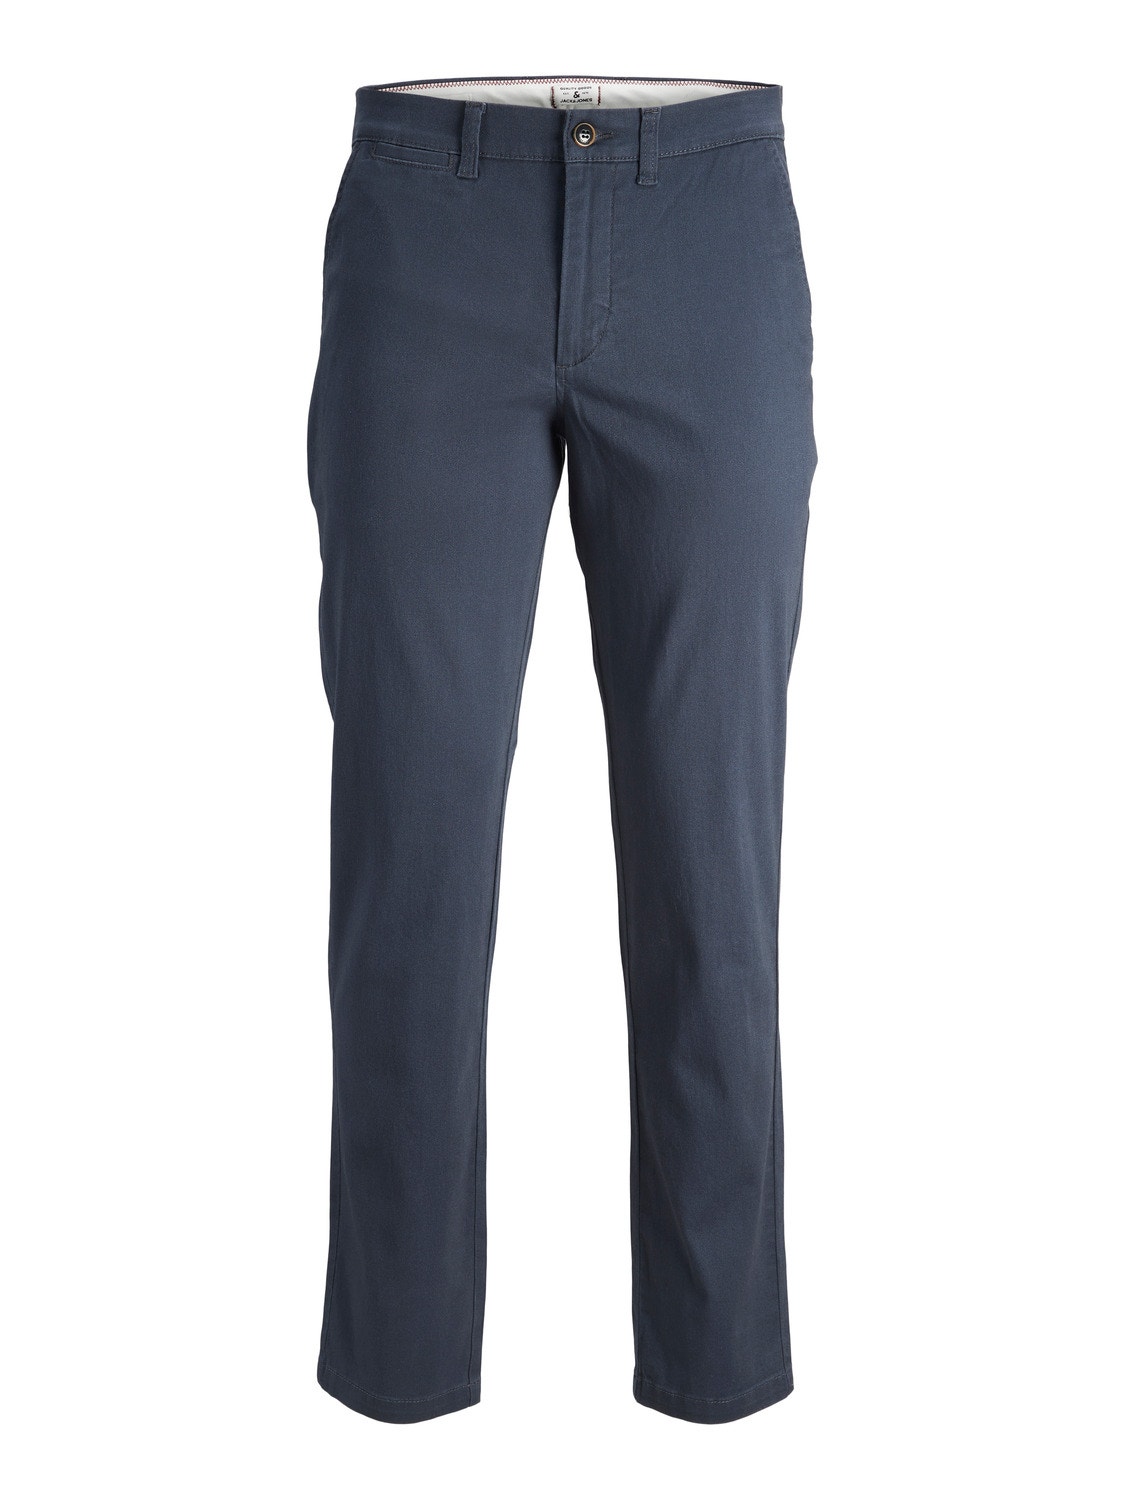 Jack & Jones Chino trousers For boys -Navy Blazer - 12224625